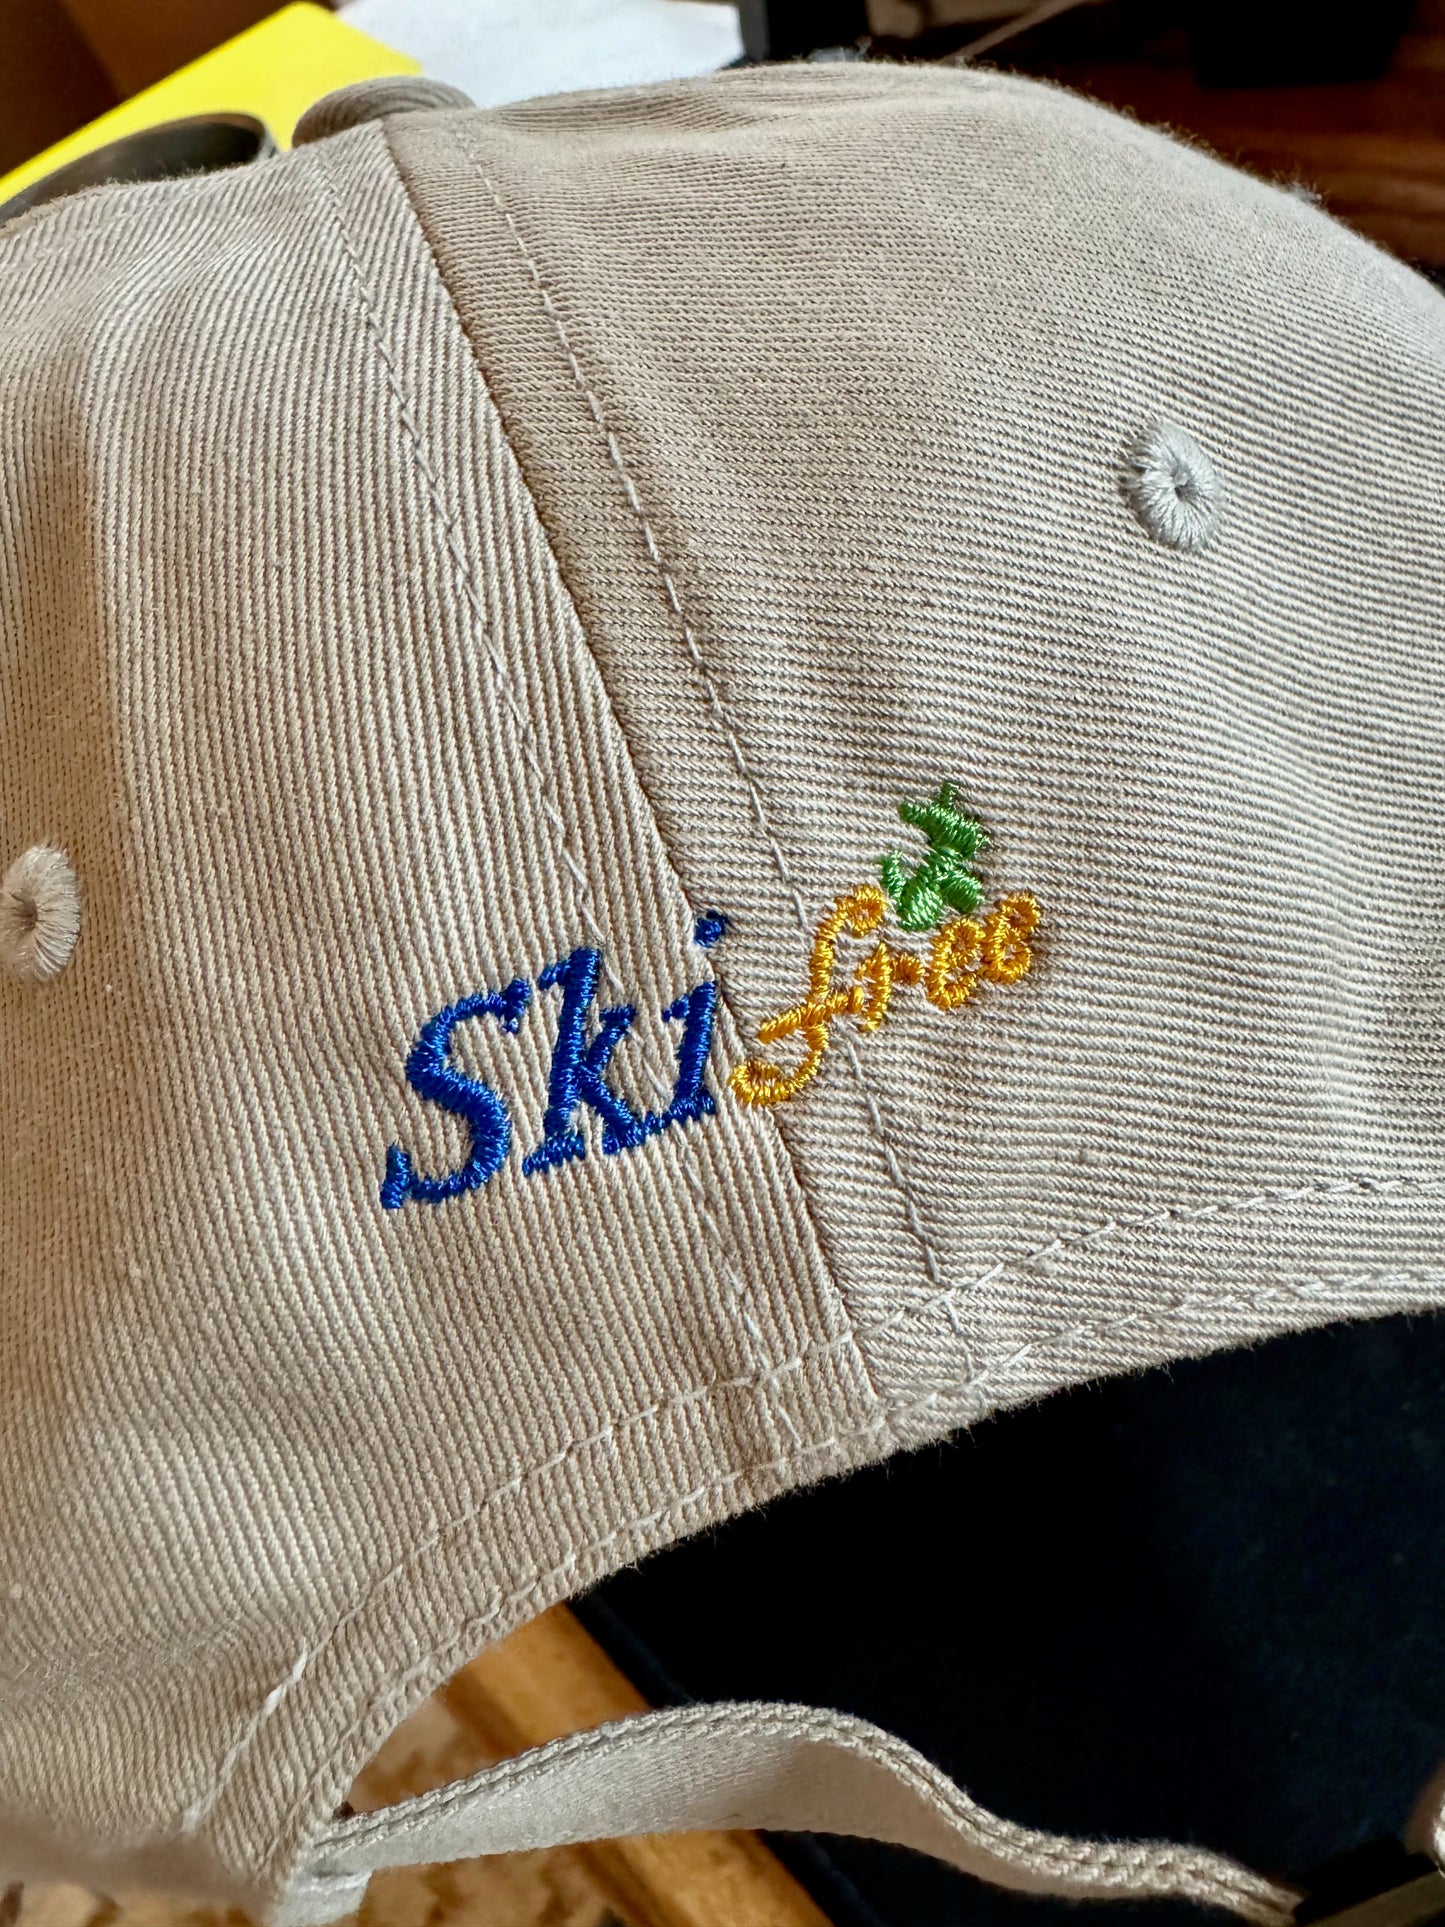 SkiFree Yeti Hat